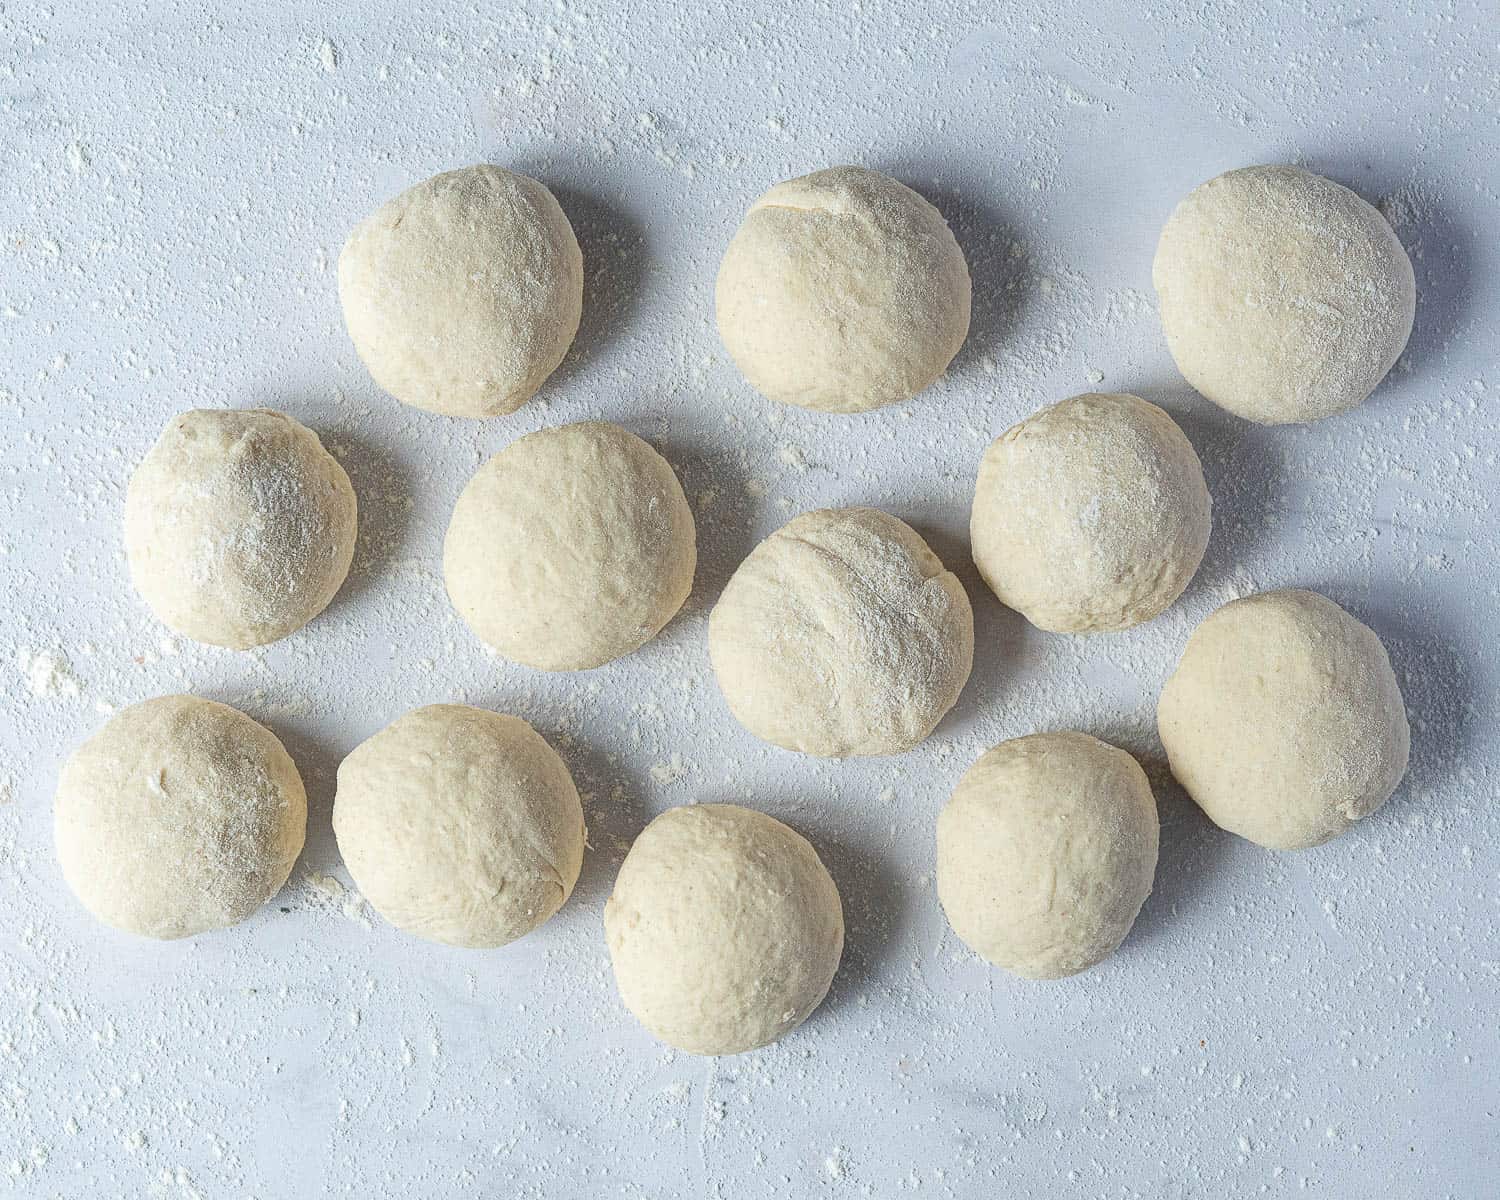 The dough divided into twelve balls.